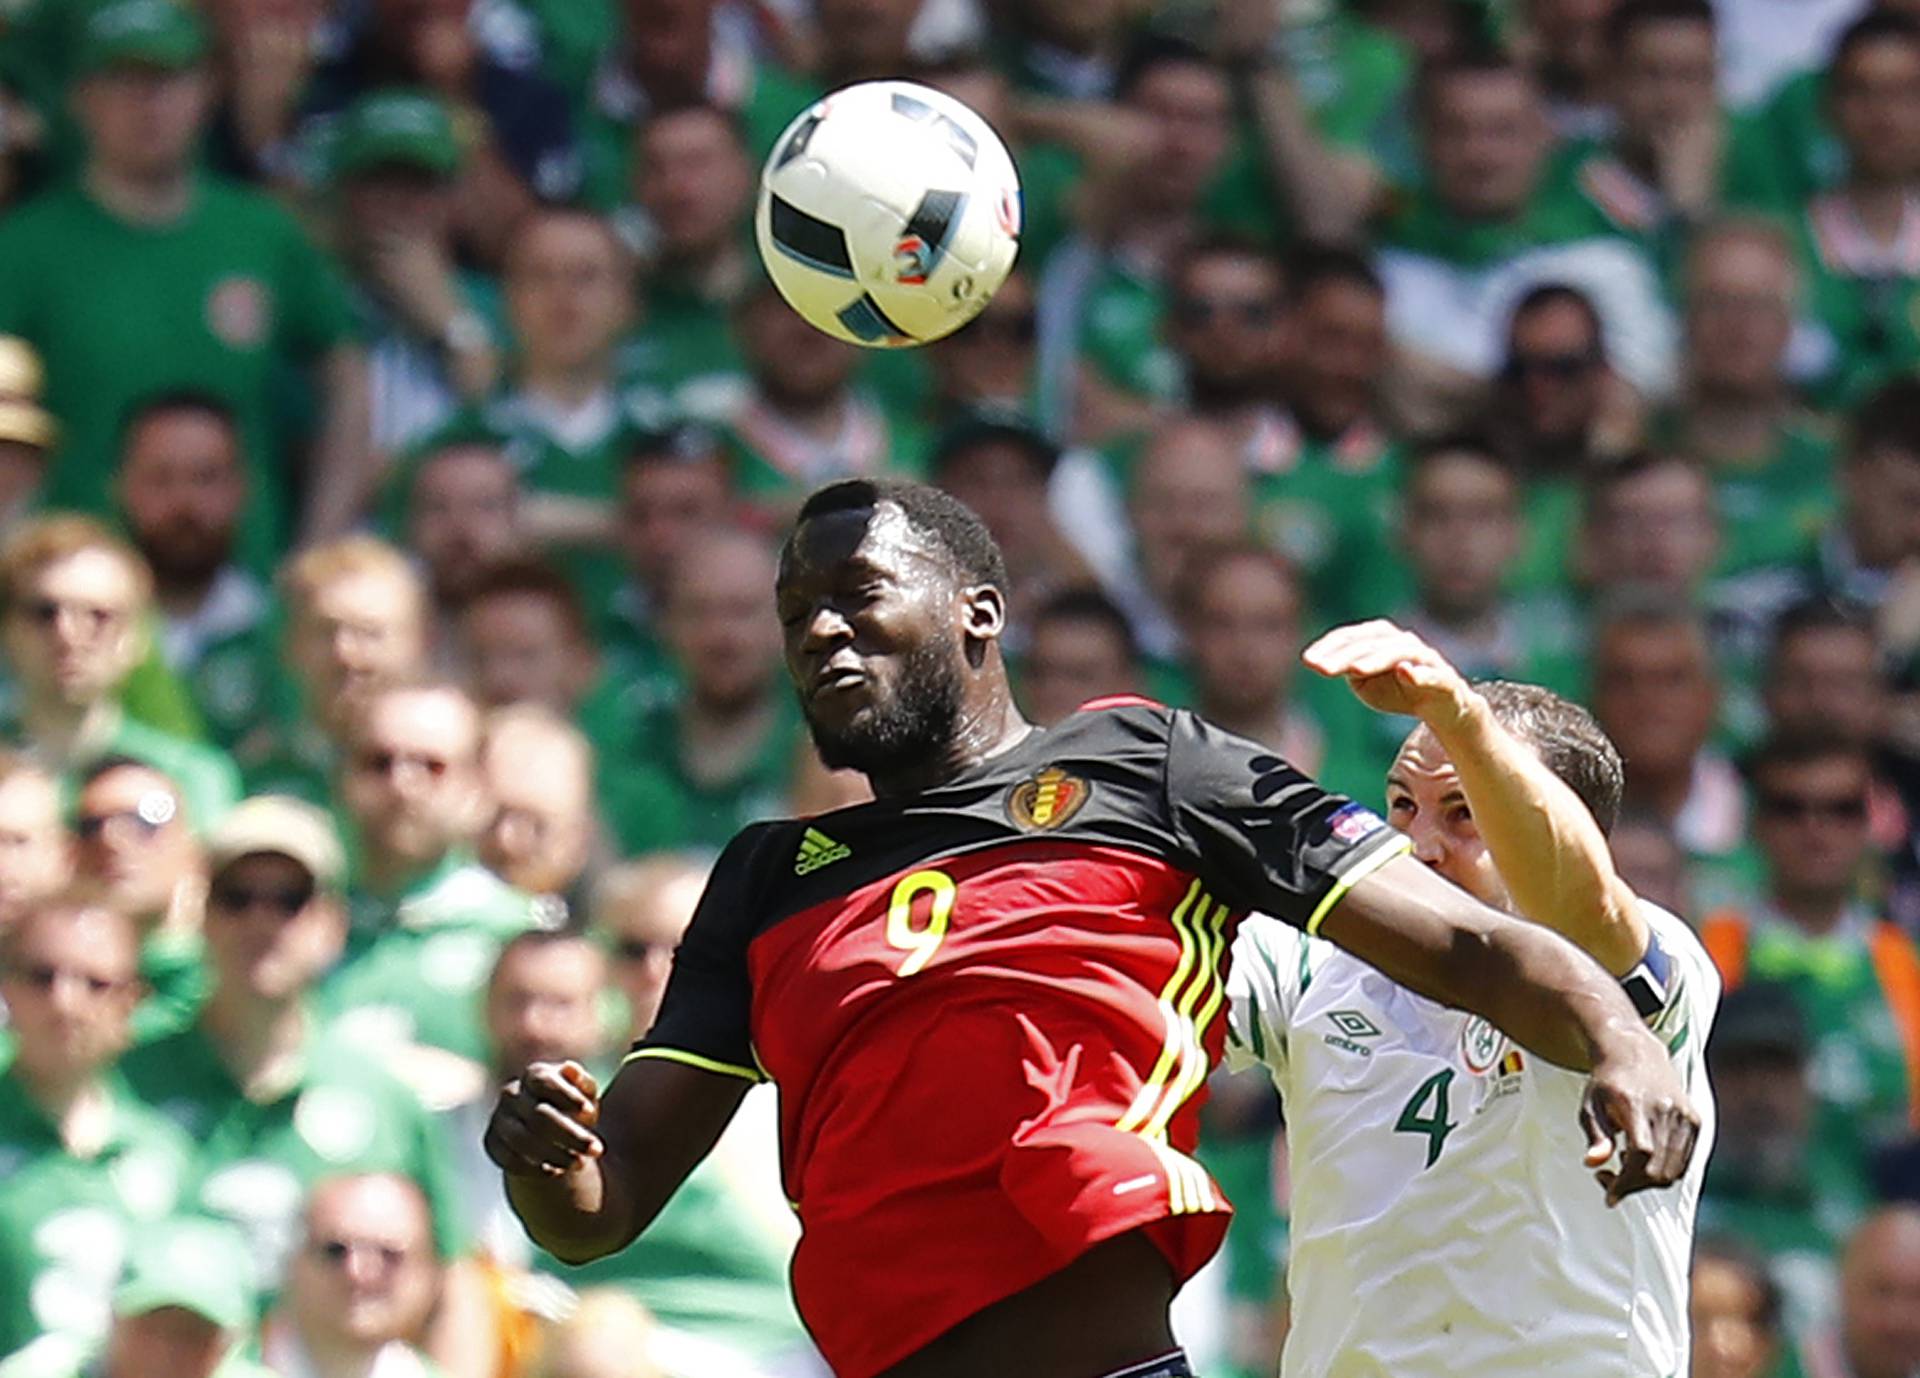 Belgium v Republic of Ireland - EURO 2016 - Group E